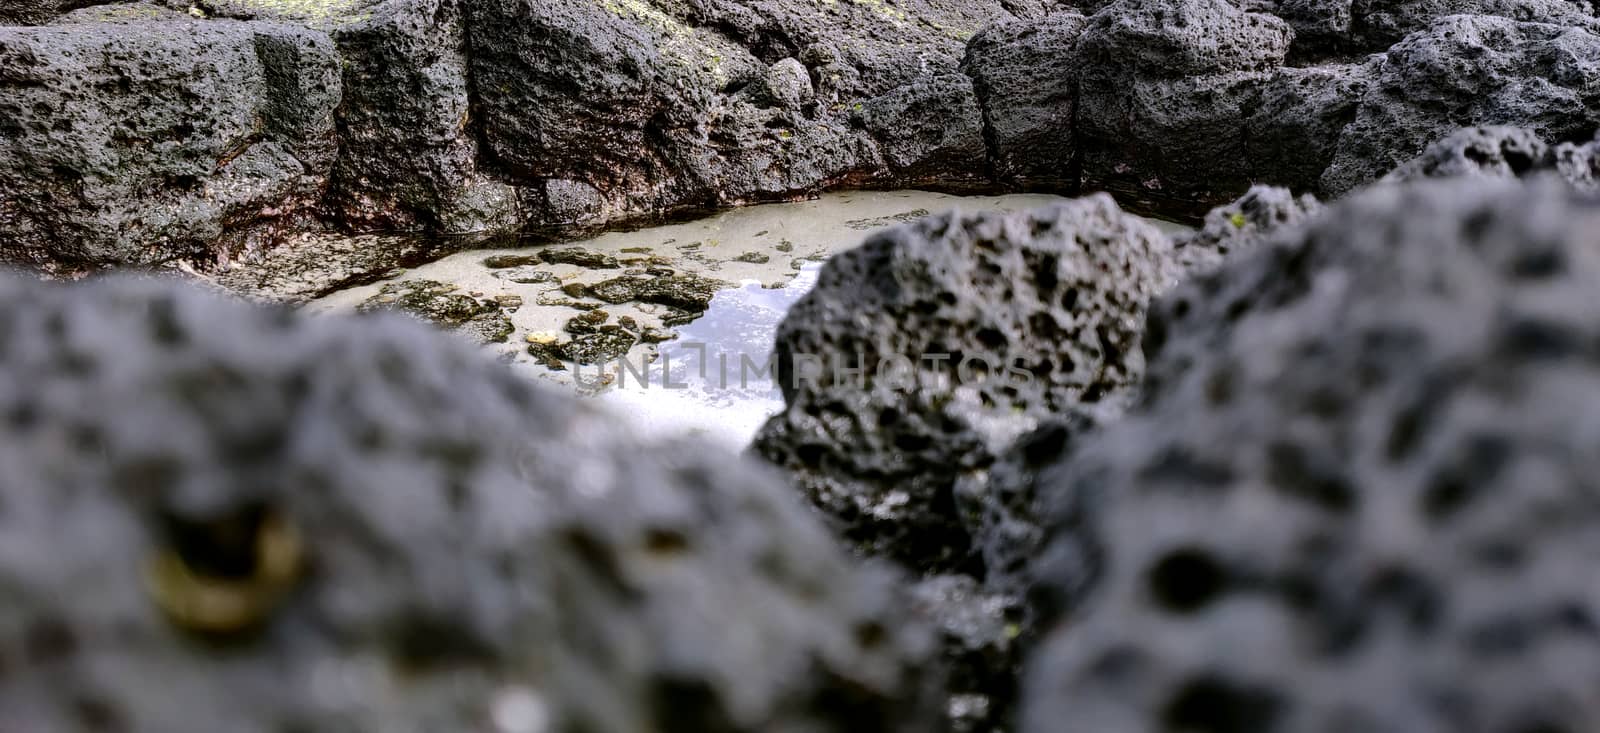 Macro shot of volcanic black rock on the beach in jeju island, south korea by mshivangi92